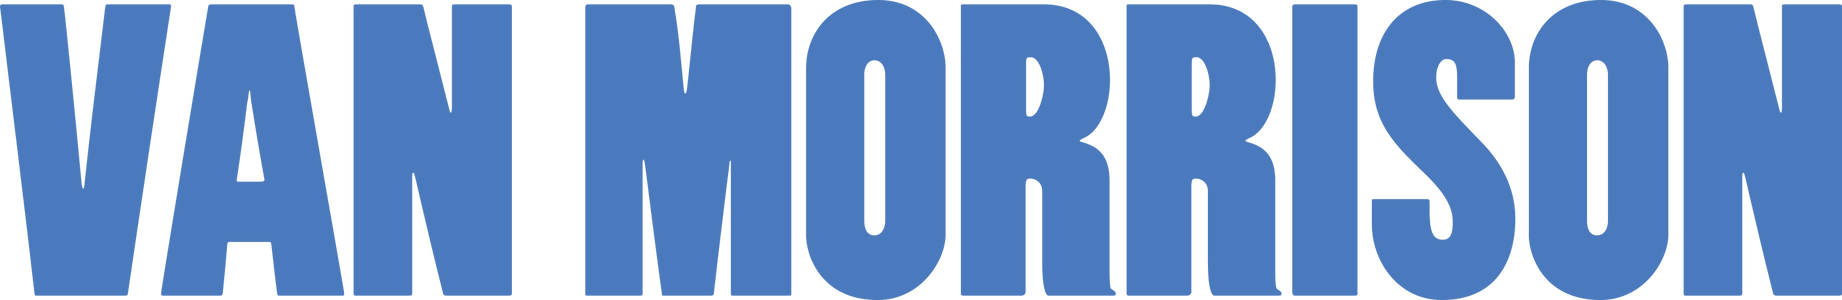 Van Morrison Official Store logo